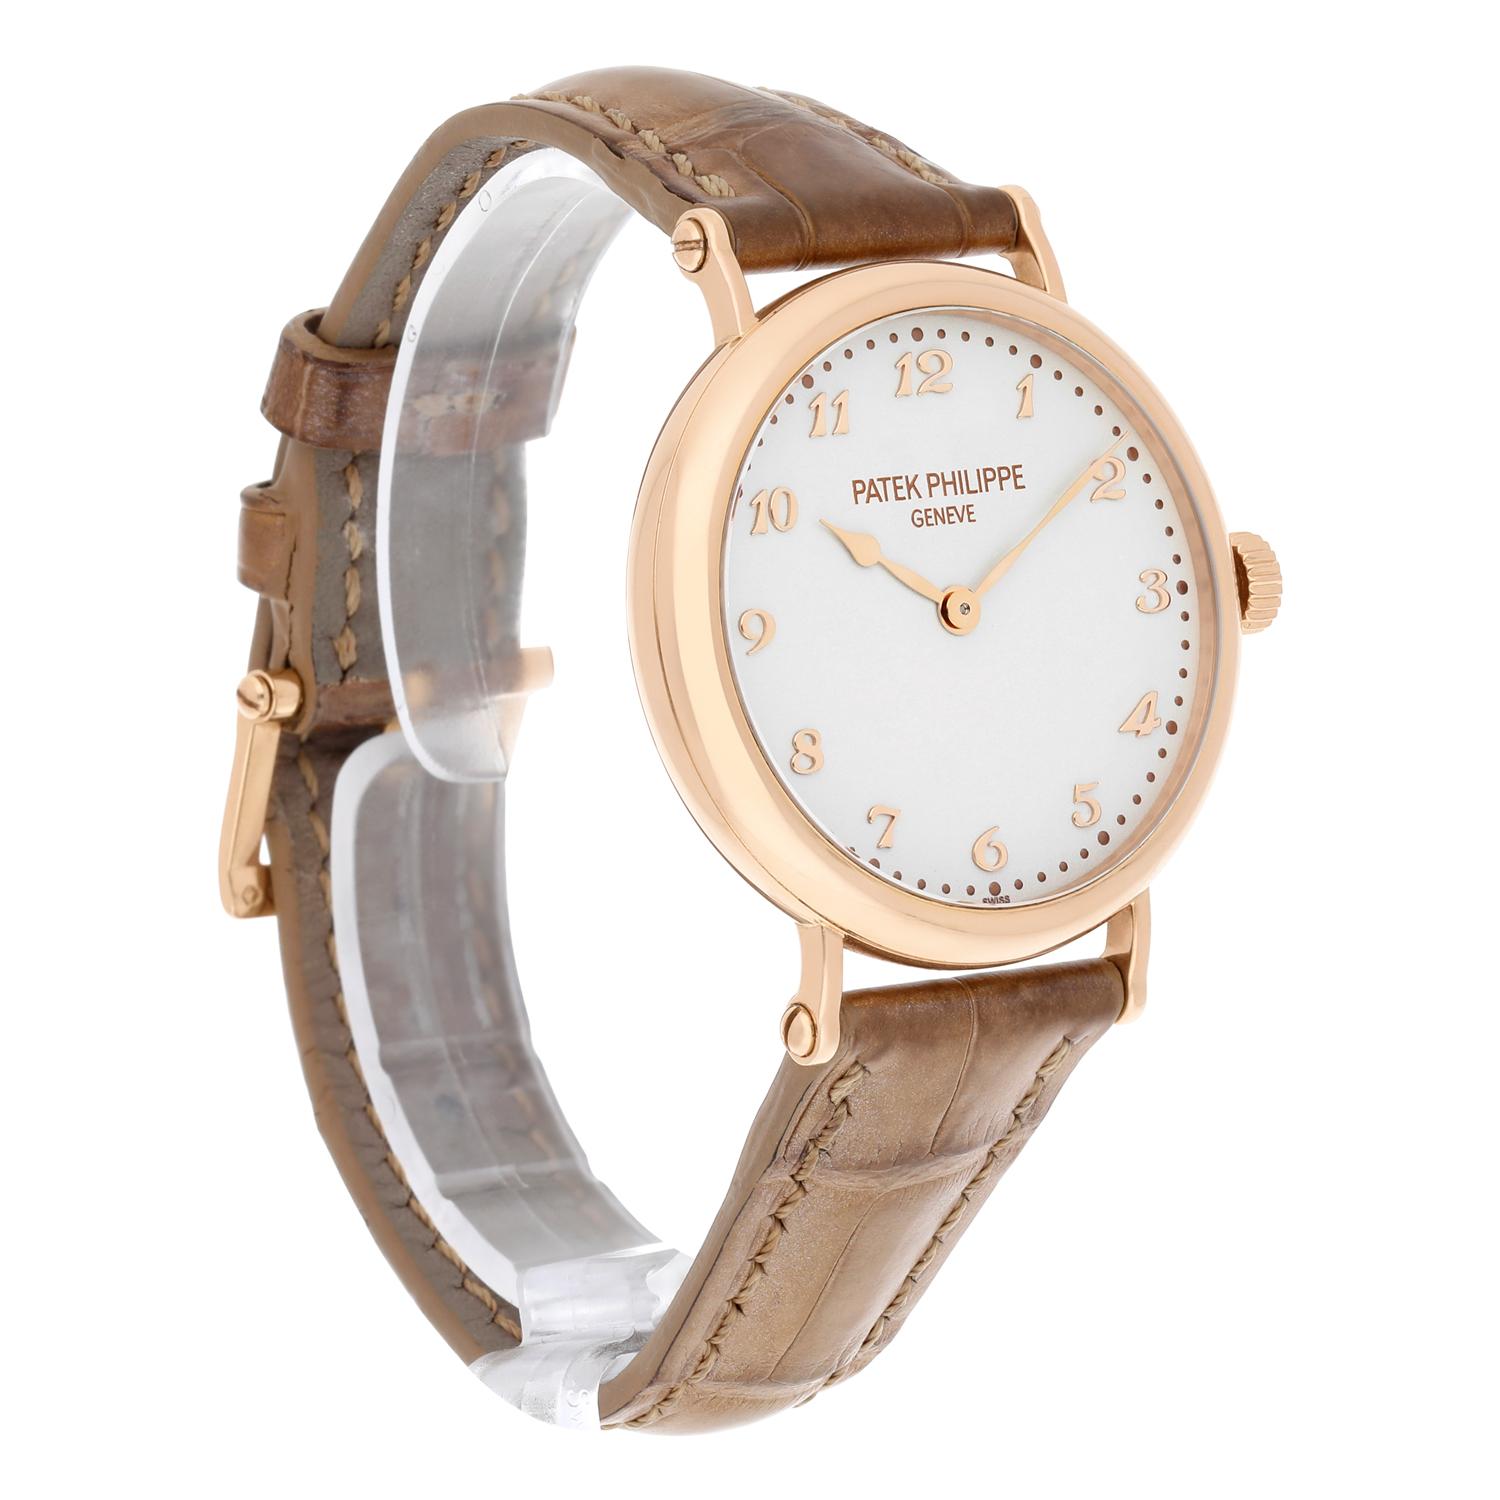 Patek Philippe Calatrava Thin 18kt Rose Gold Automatic Ladies Watch 7200R-001 For Sale 1